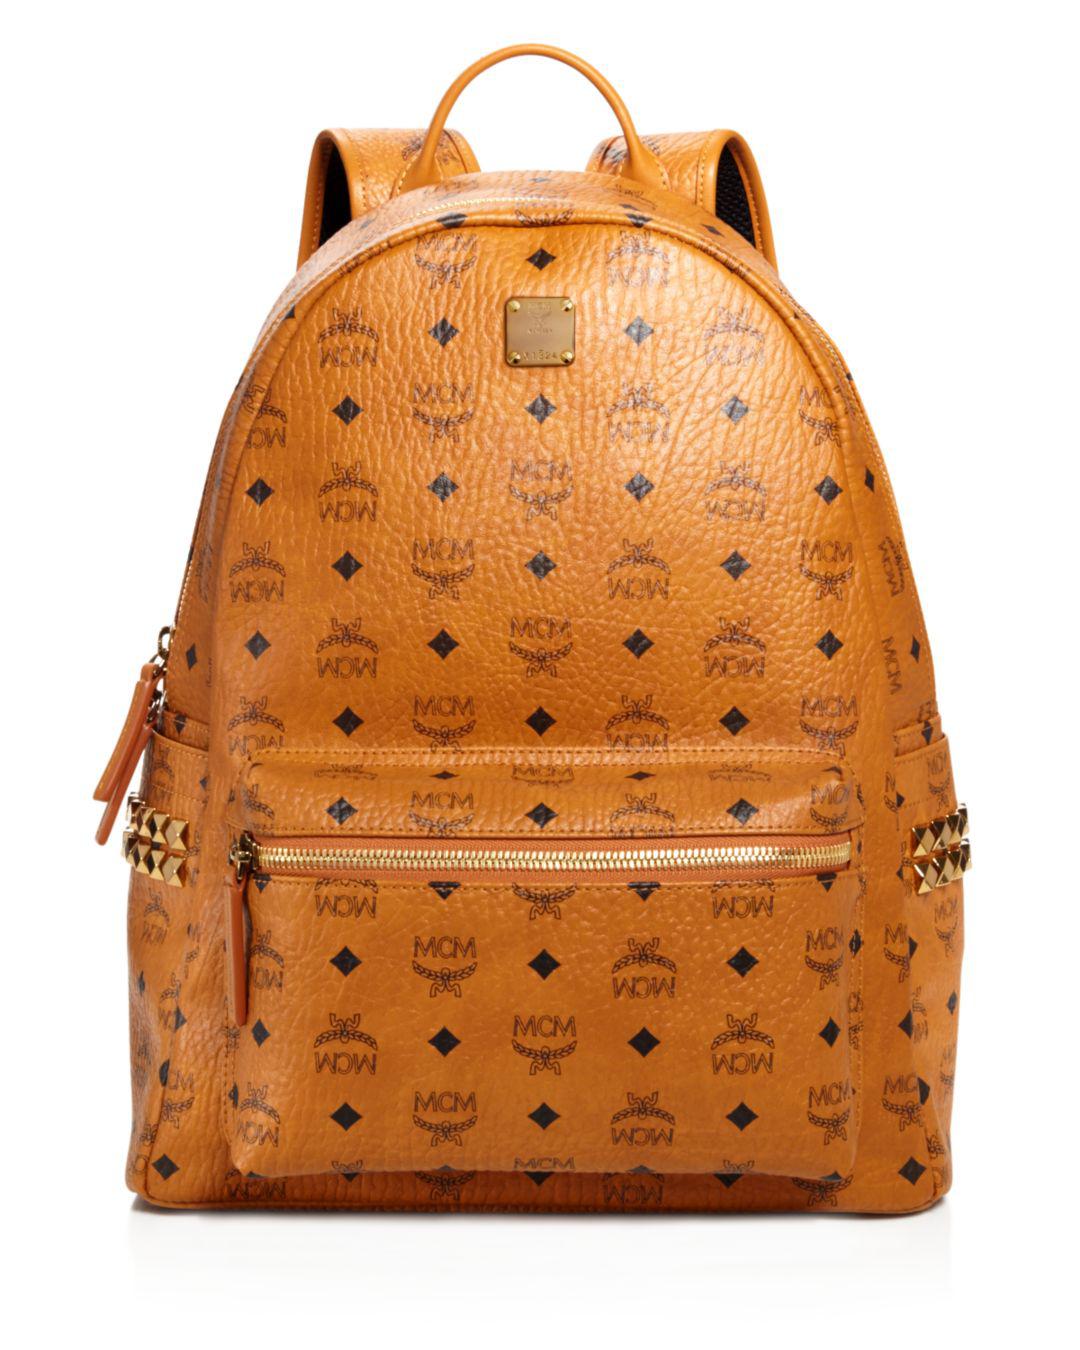 Lyst - Mcm Stark Side Stud Backpack in Brown for Men - Save 4. ...